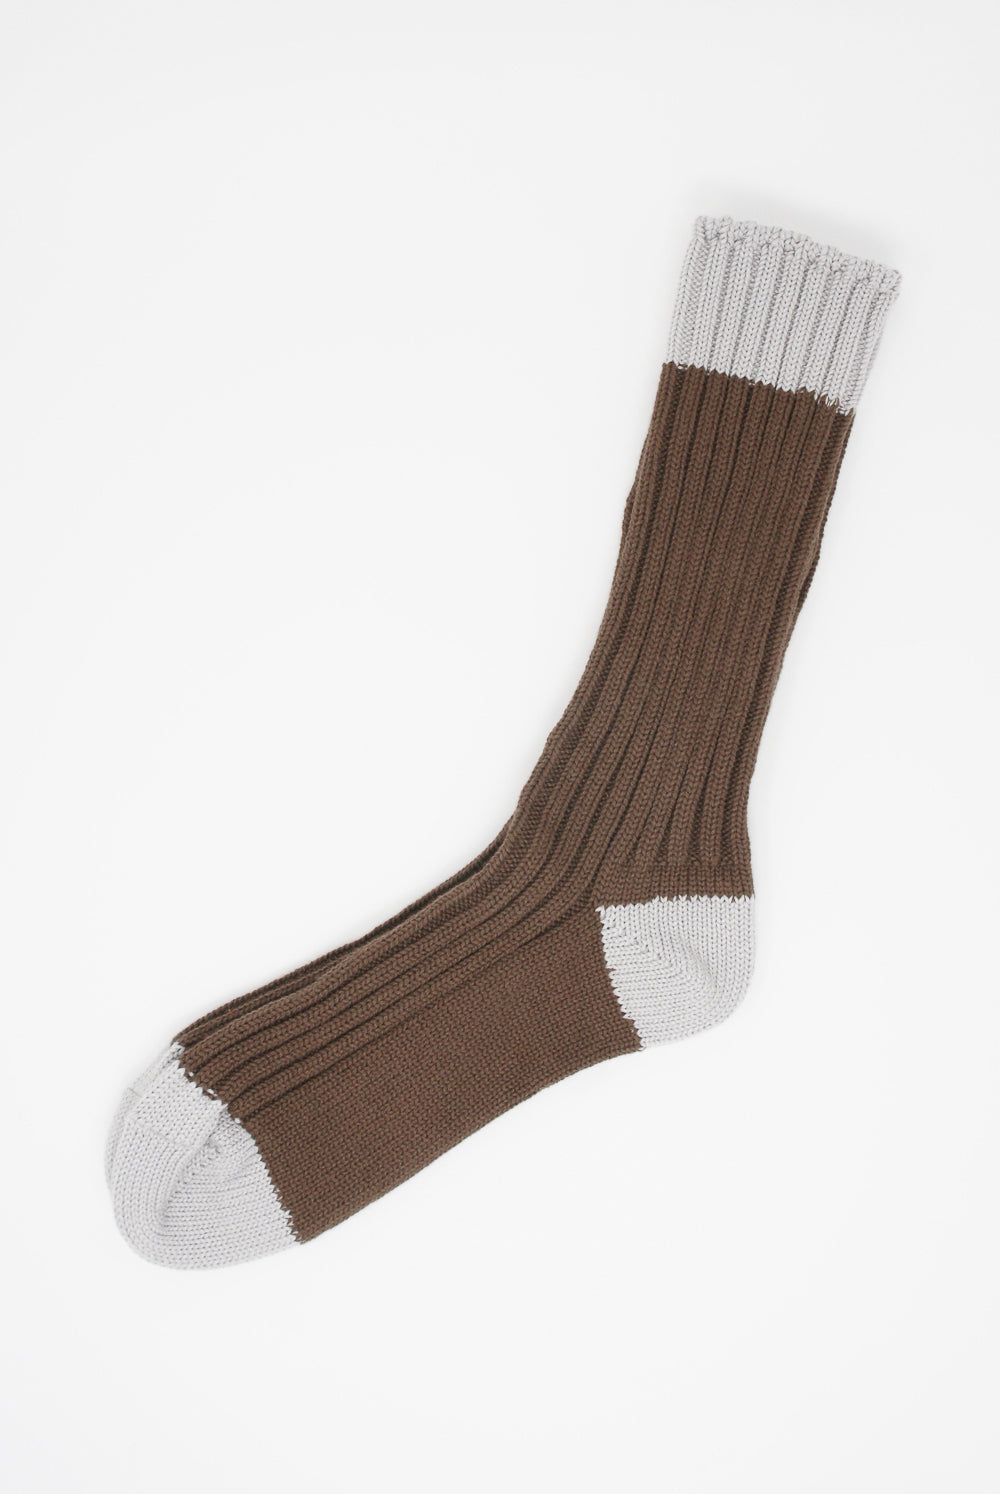 Ichi - Socks in Brown